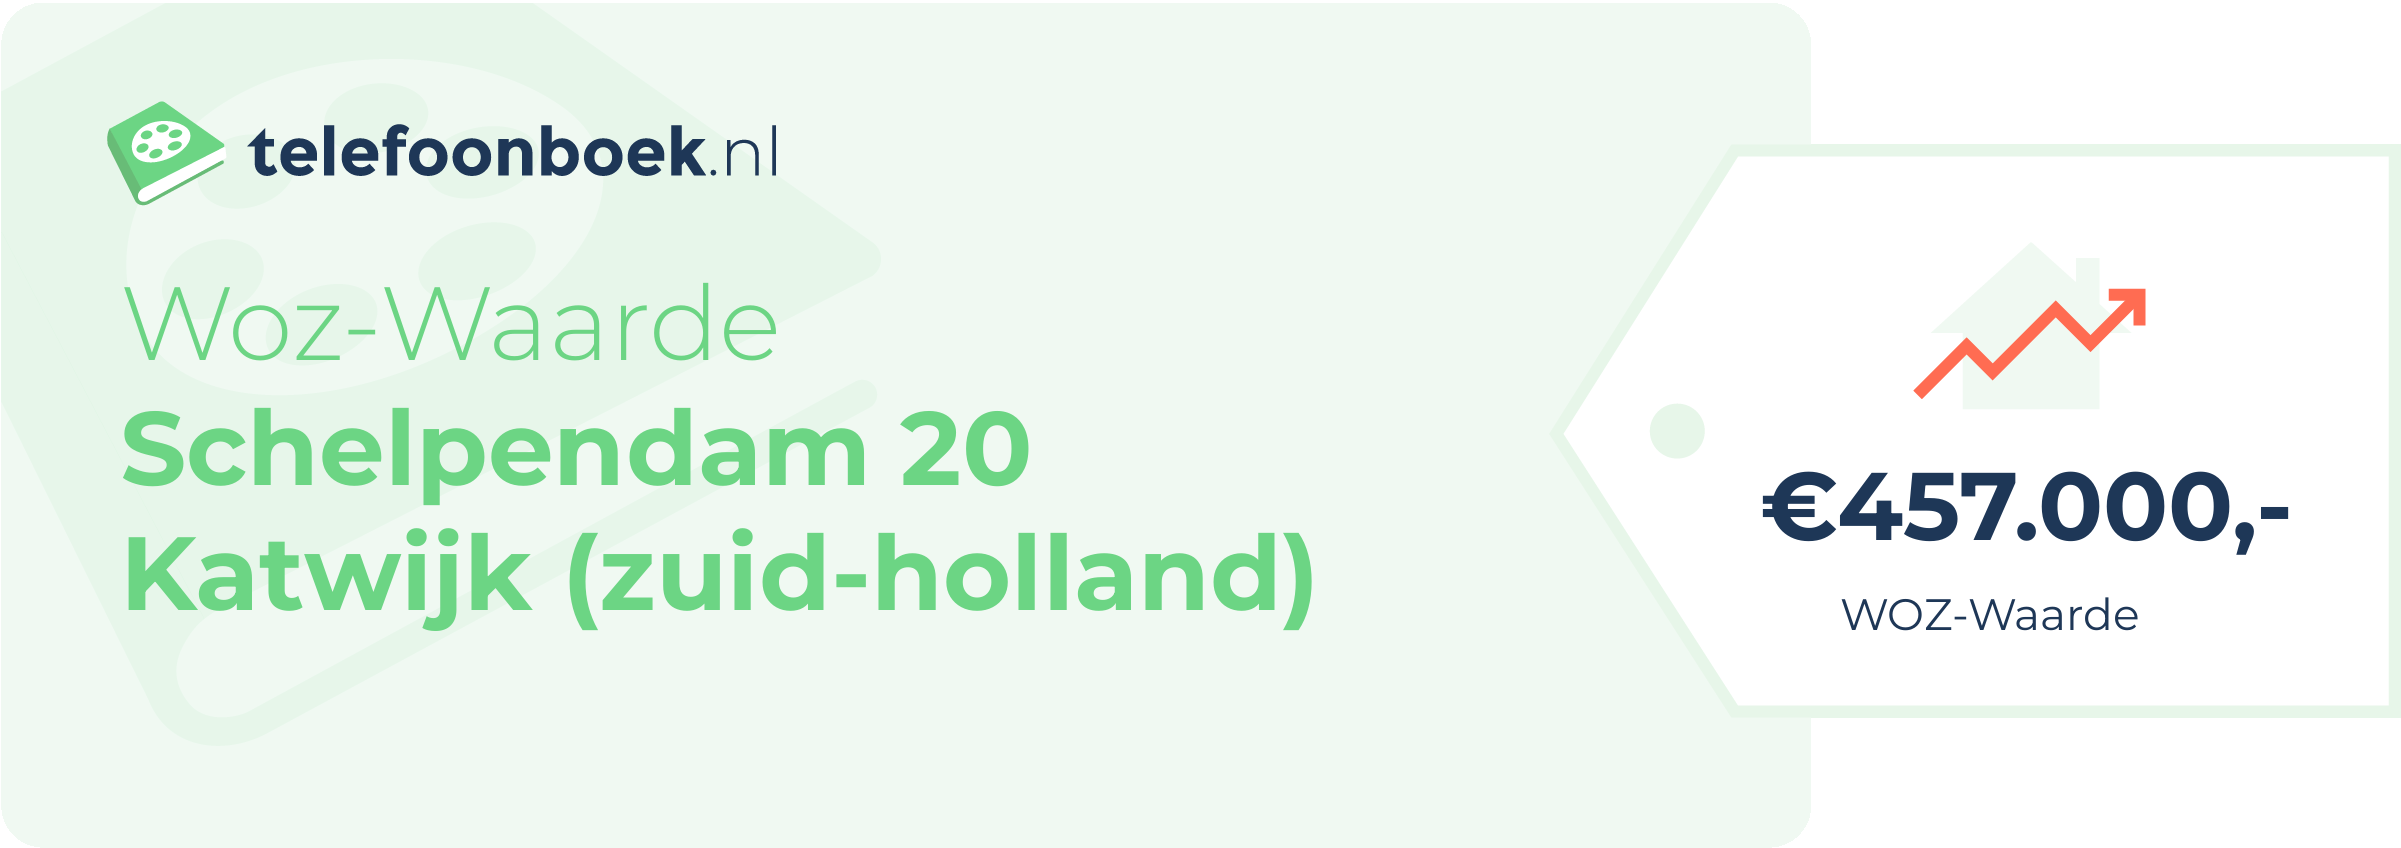 WOZ-waarde Schelpendam 20 Katwijk (Zuid-Holland)